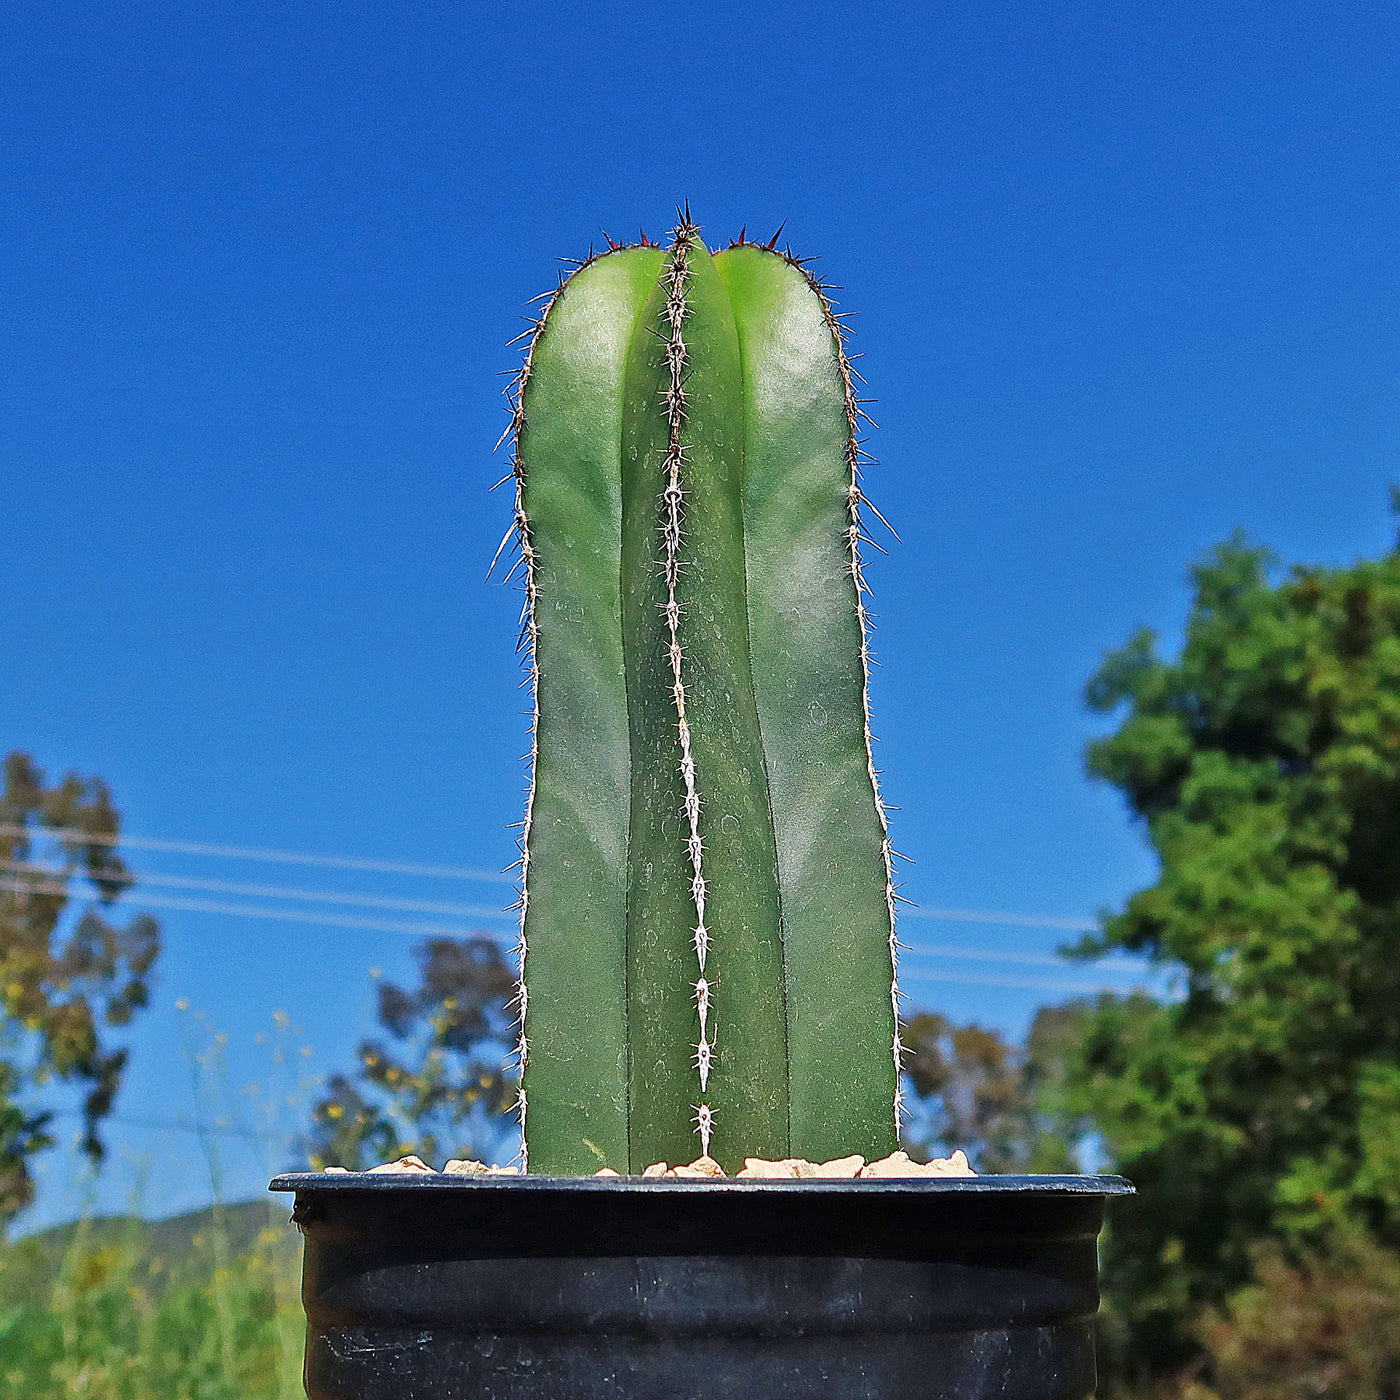 Mexican Fence Post Cactus 'Pachycereus marginatus' (17)